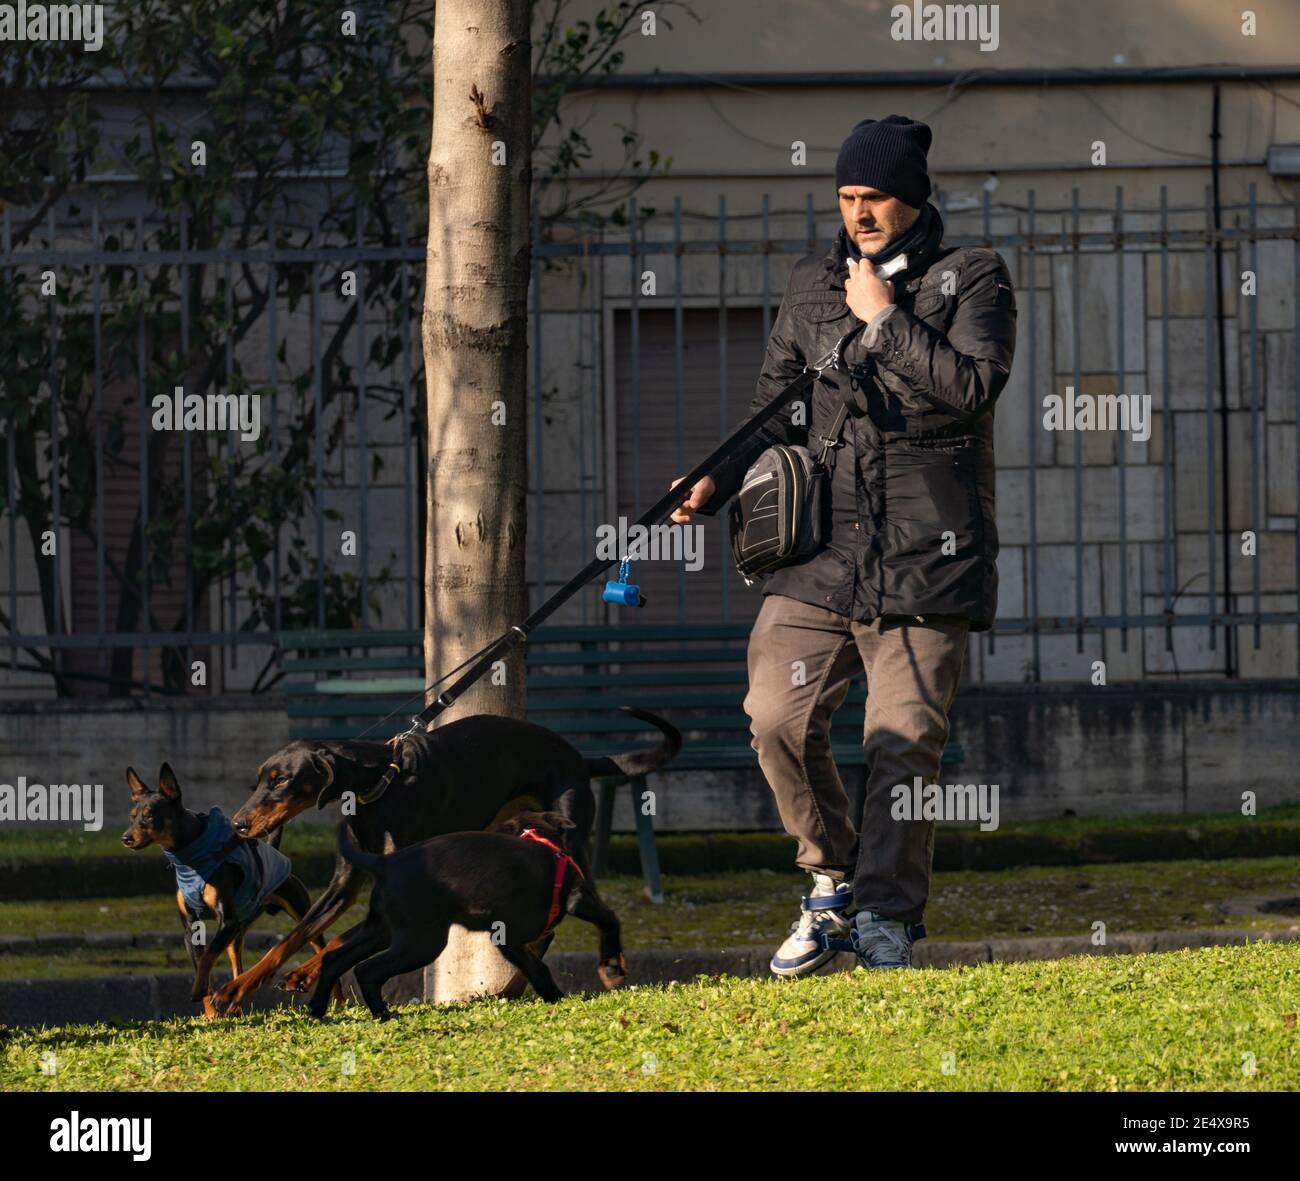 SANTA MARIA CAPUA VETERE, ITALY - Jan 19, 2021: Caserta, Italy, January 19th 2021, Walking with the dogs in the park Stock Photo